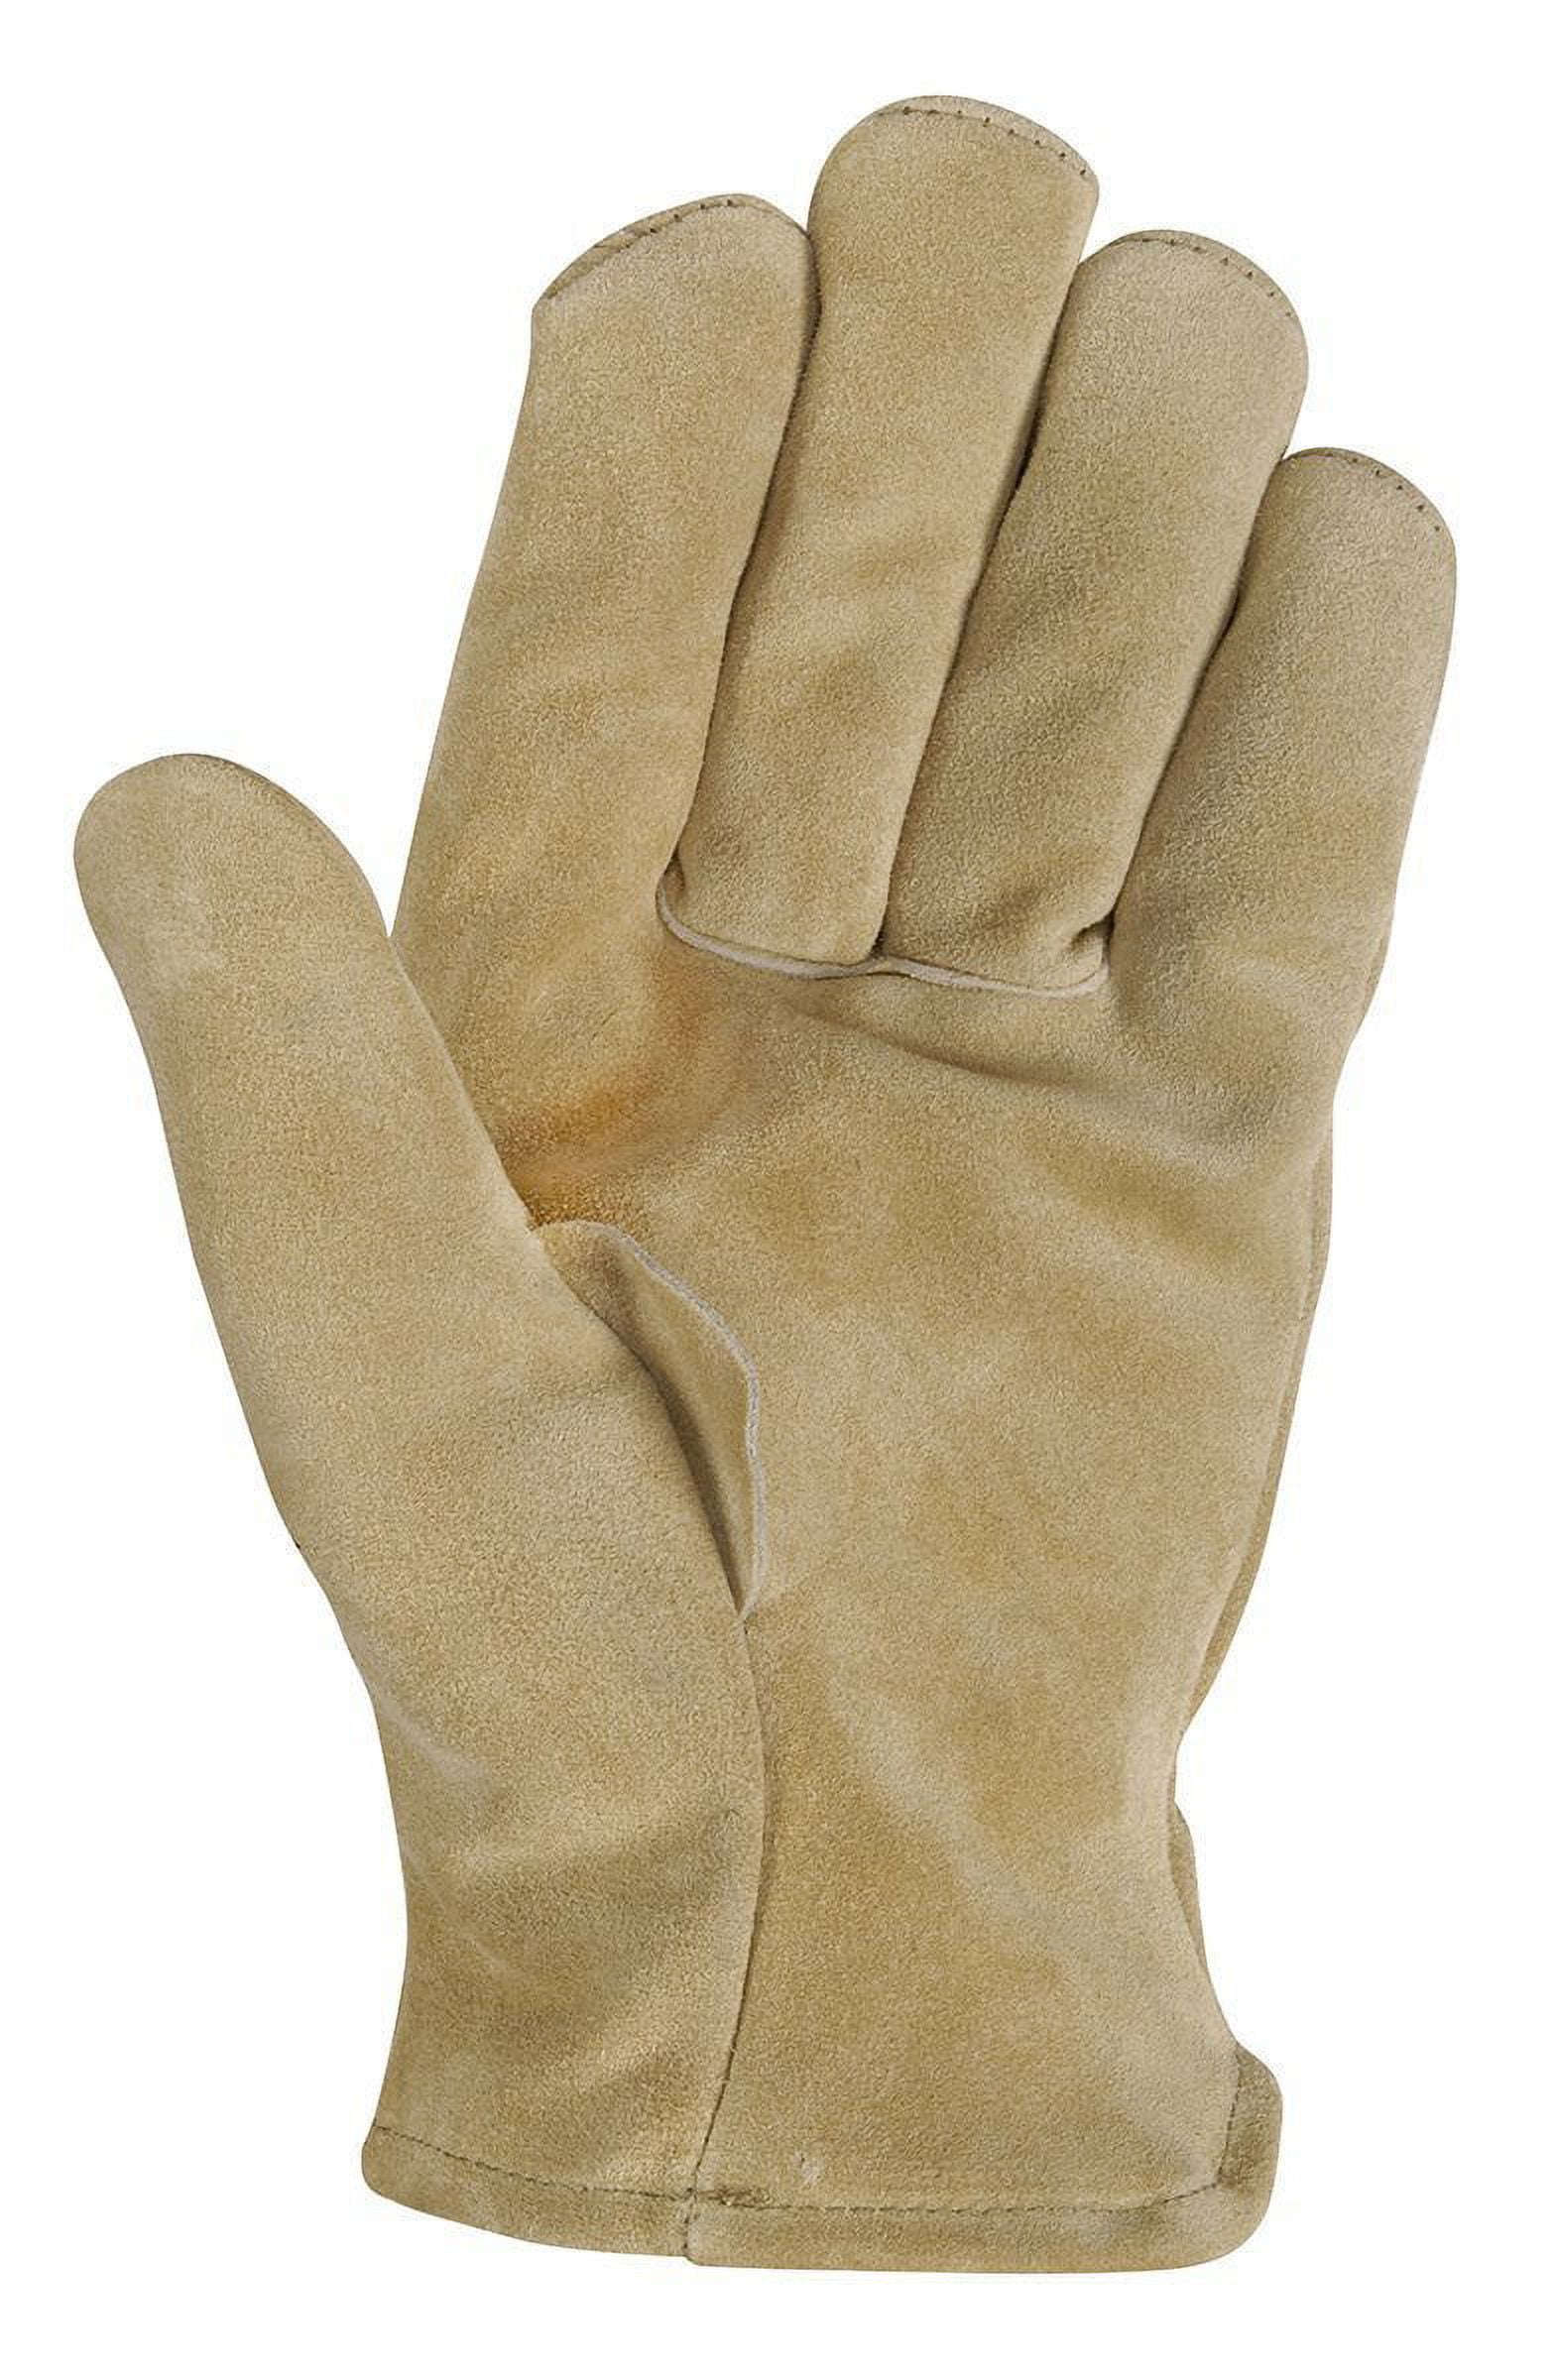 Wells Lamont 2614 Cut Resistant Heat Glove